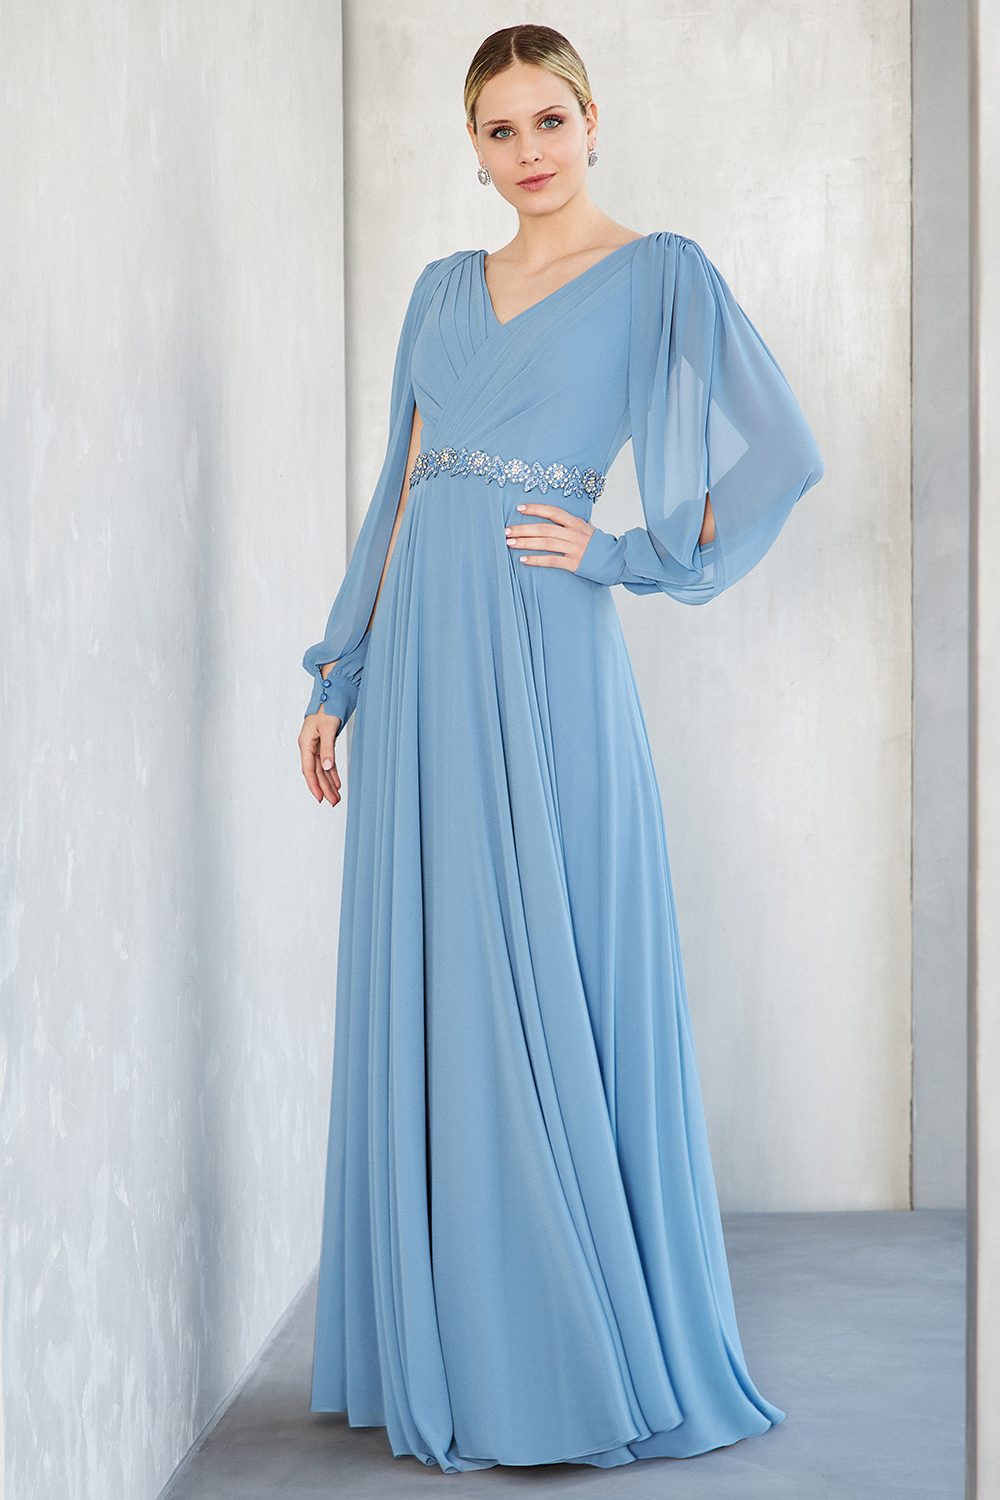 Классические платья / Long evening chiffon dress with beading at the waist and long sleeves